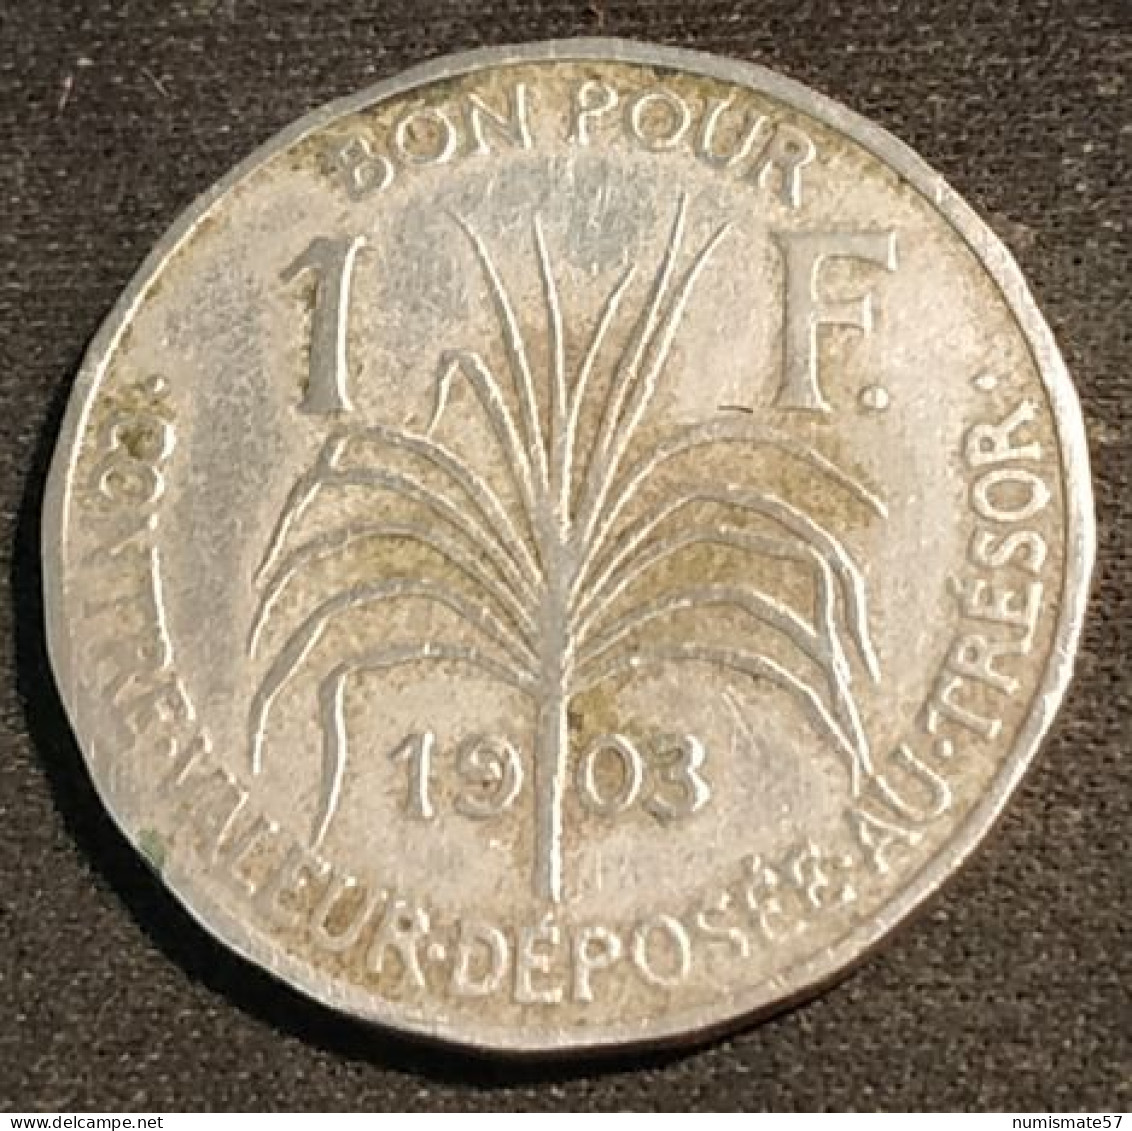 RARE - GUADELOUPE - BON POUR 1 FRANC 1903 - KM 46 - Guadeloupe En Martinique